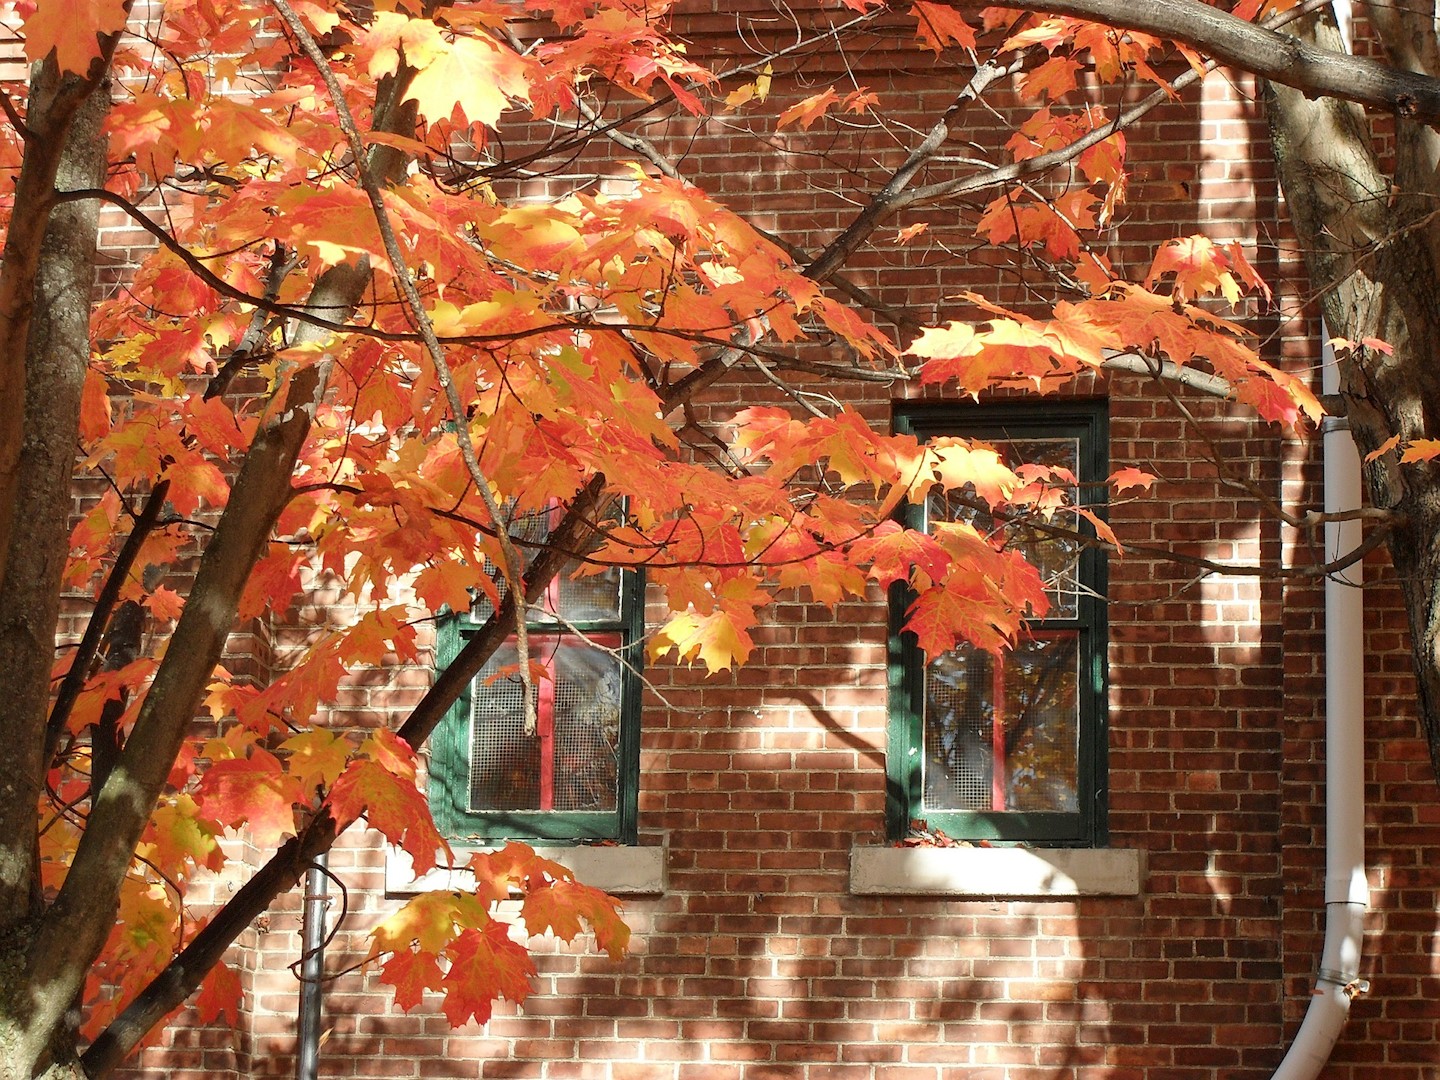 Vermont fall - image by donwhite84 @ pixabay.com